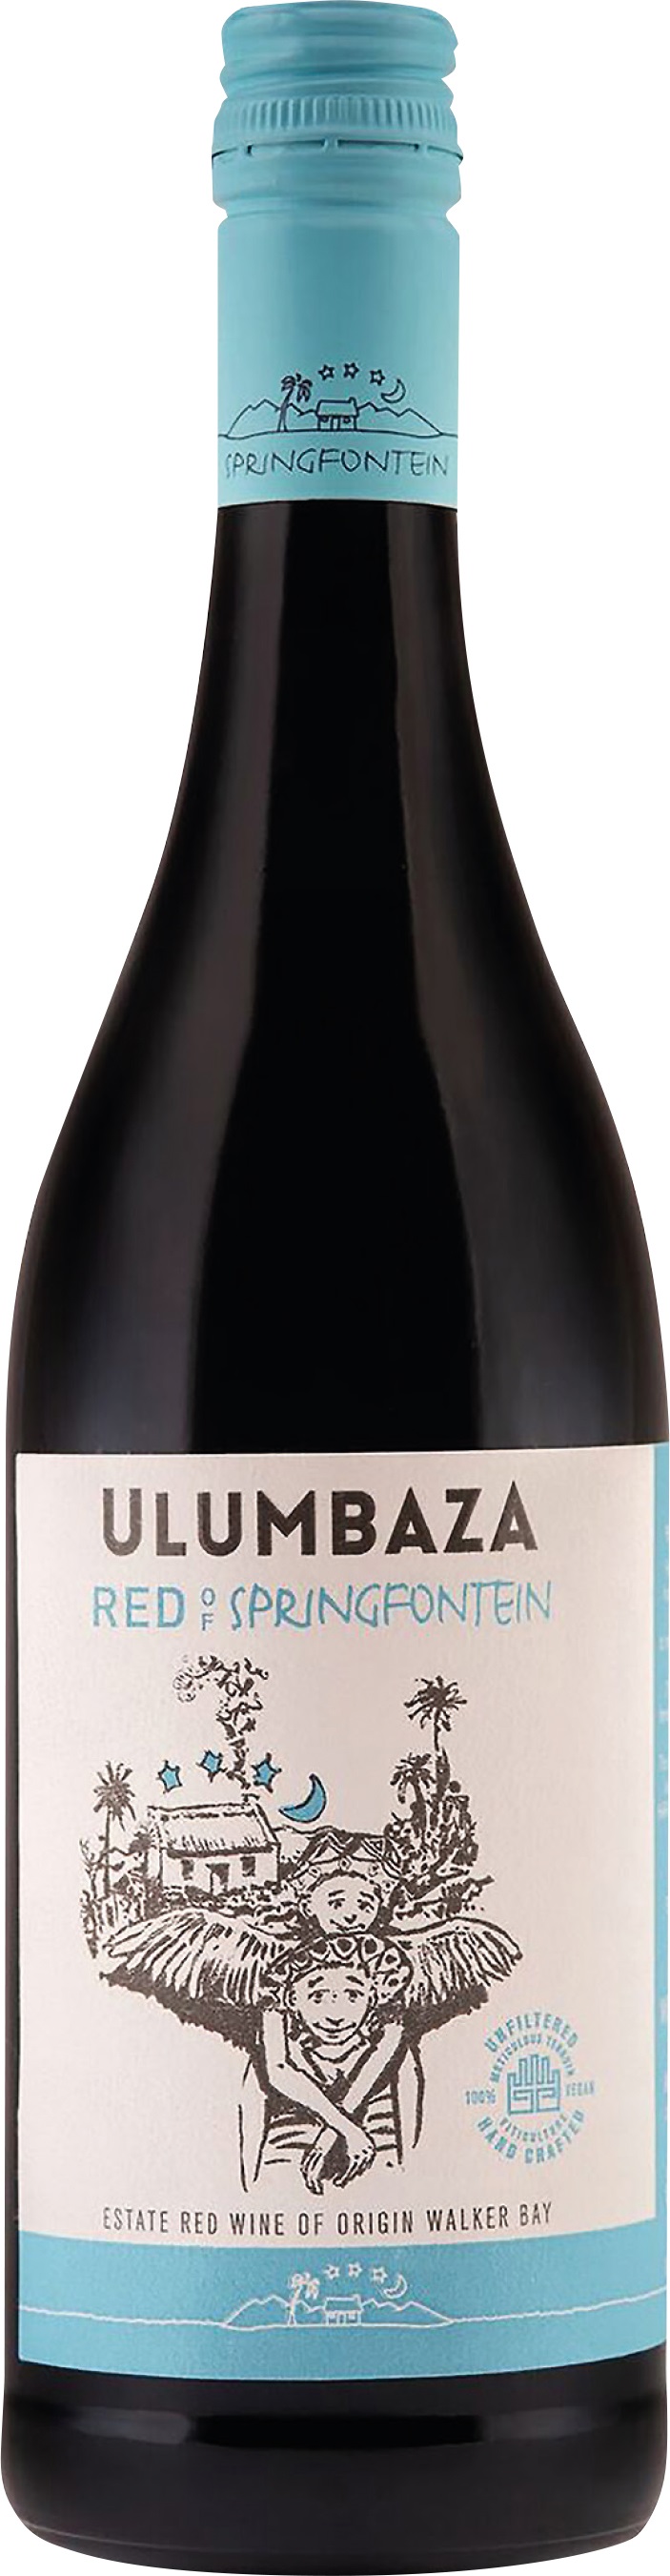 Ulumbaza Red of Springfontein